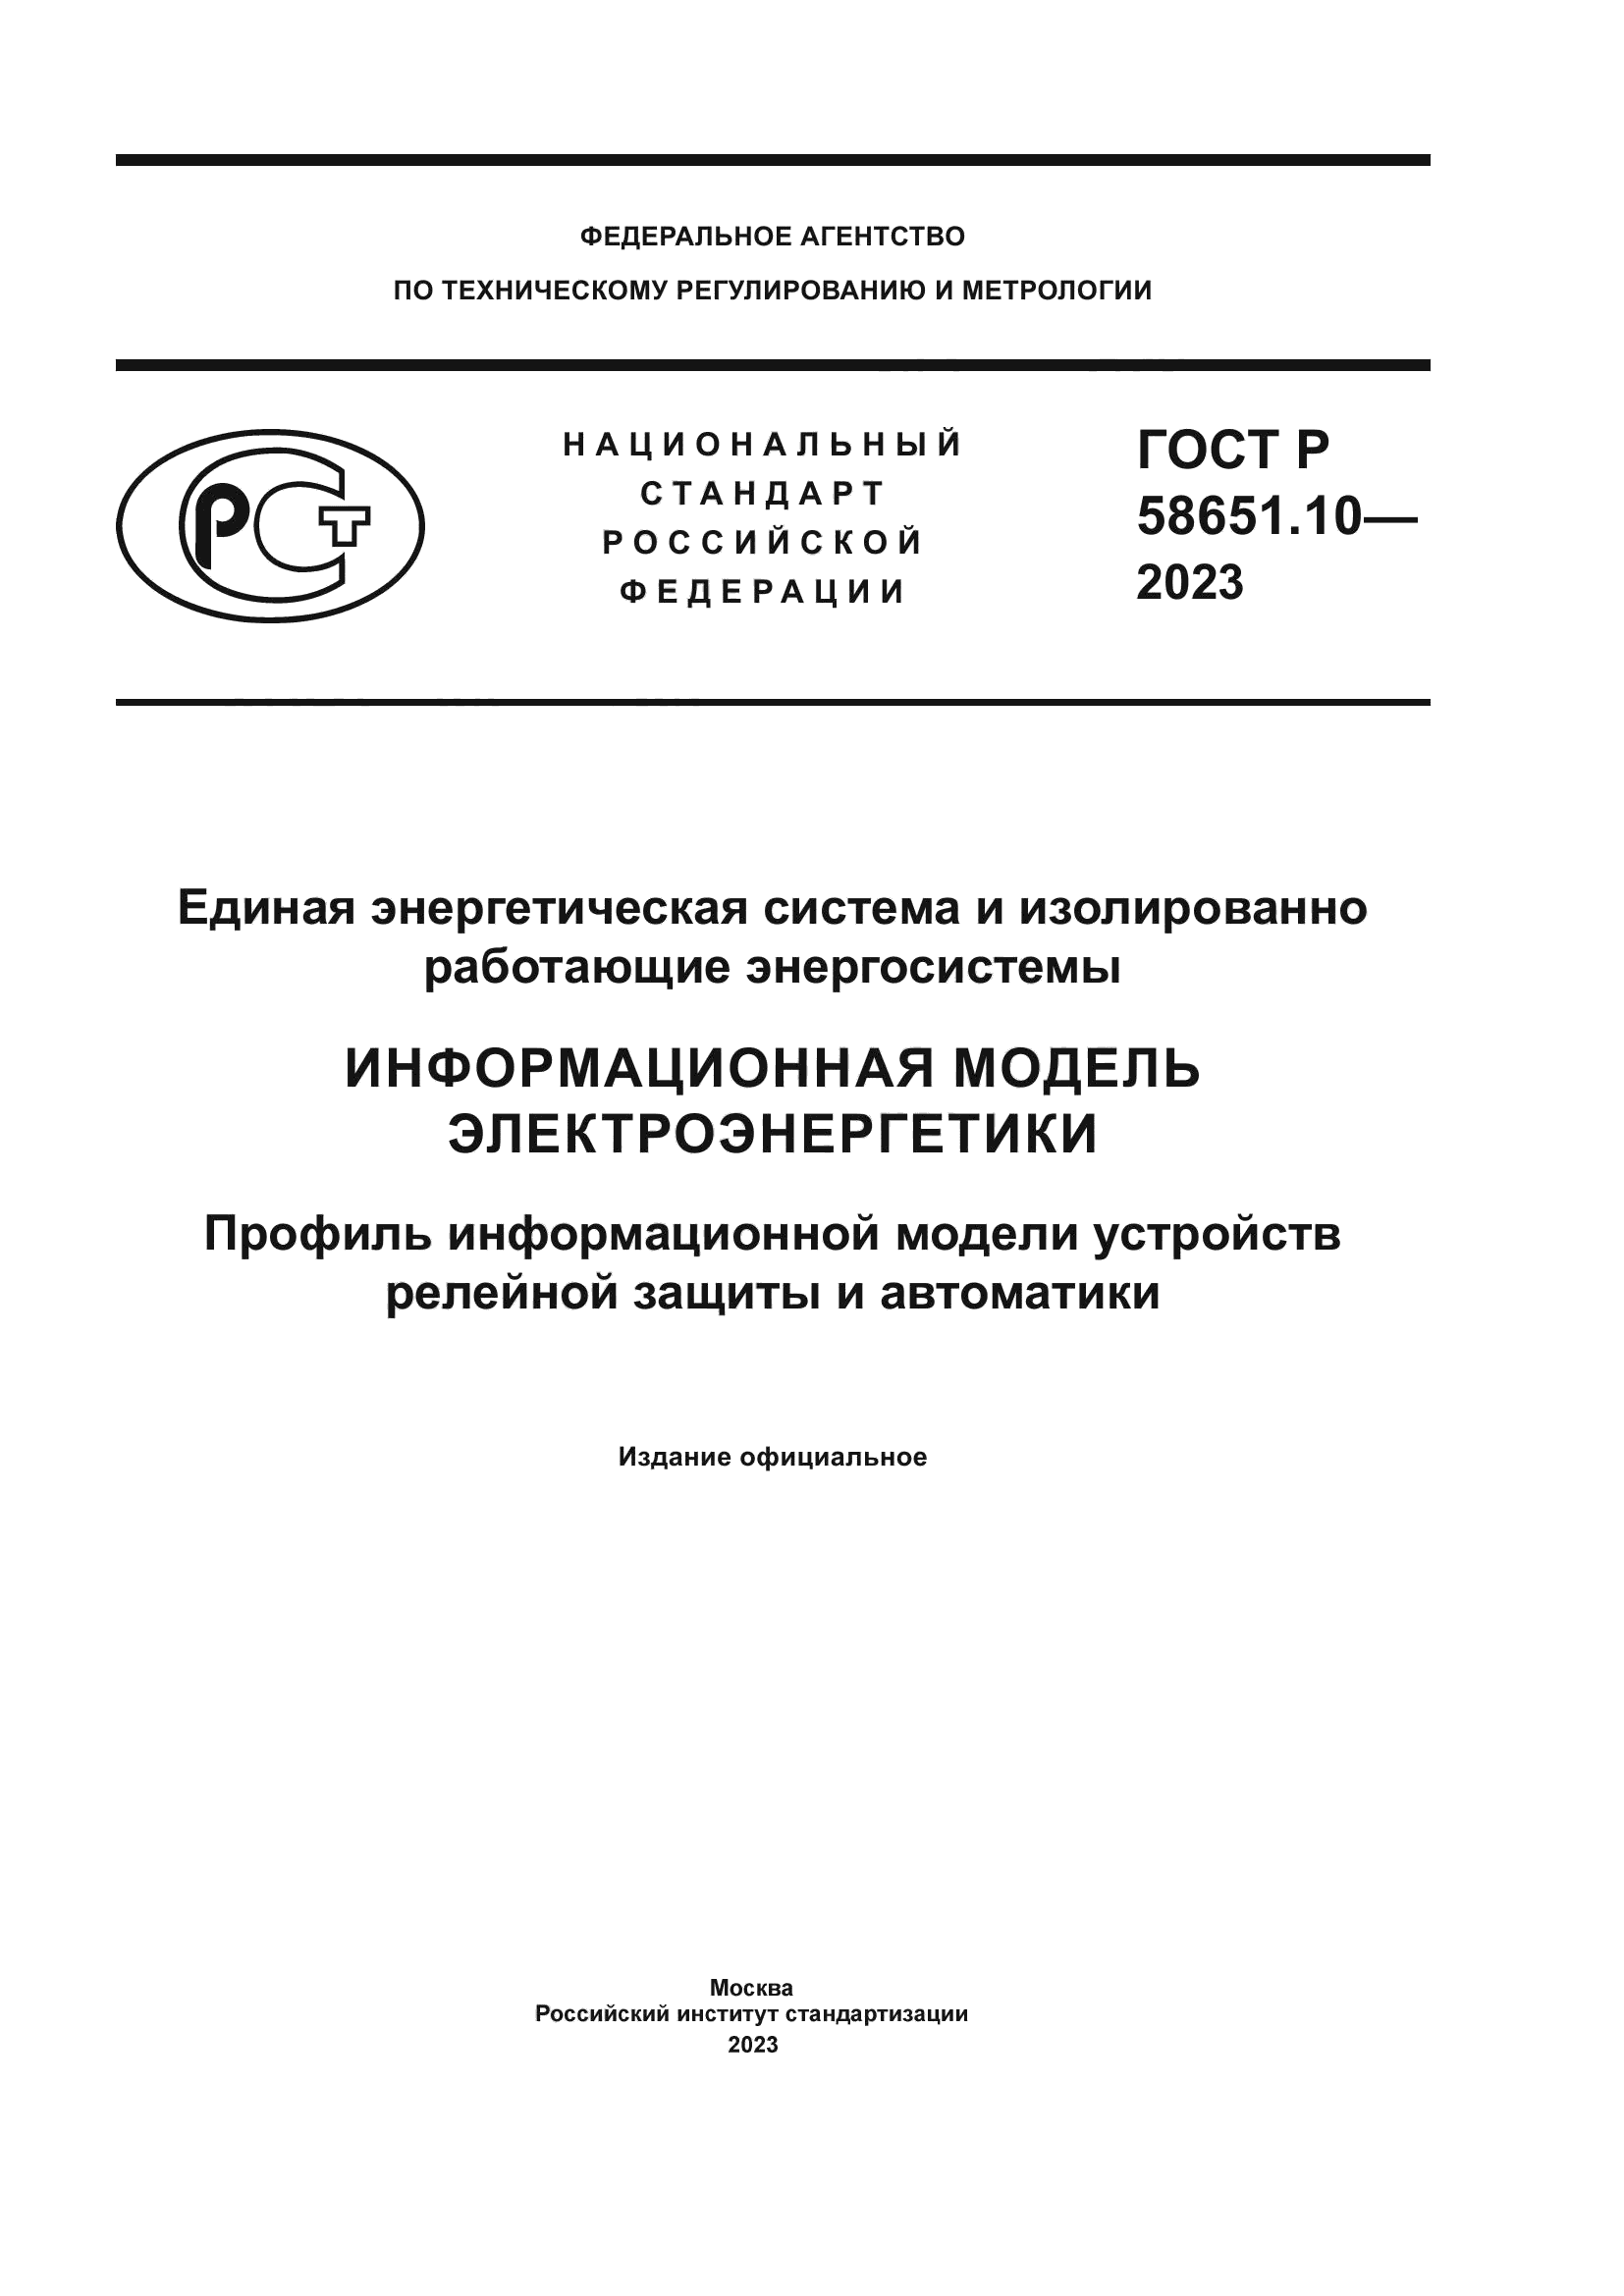 ГОСТ Р 58651.10-2023